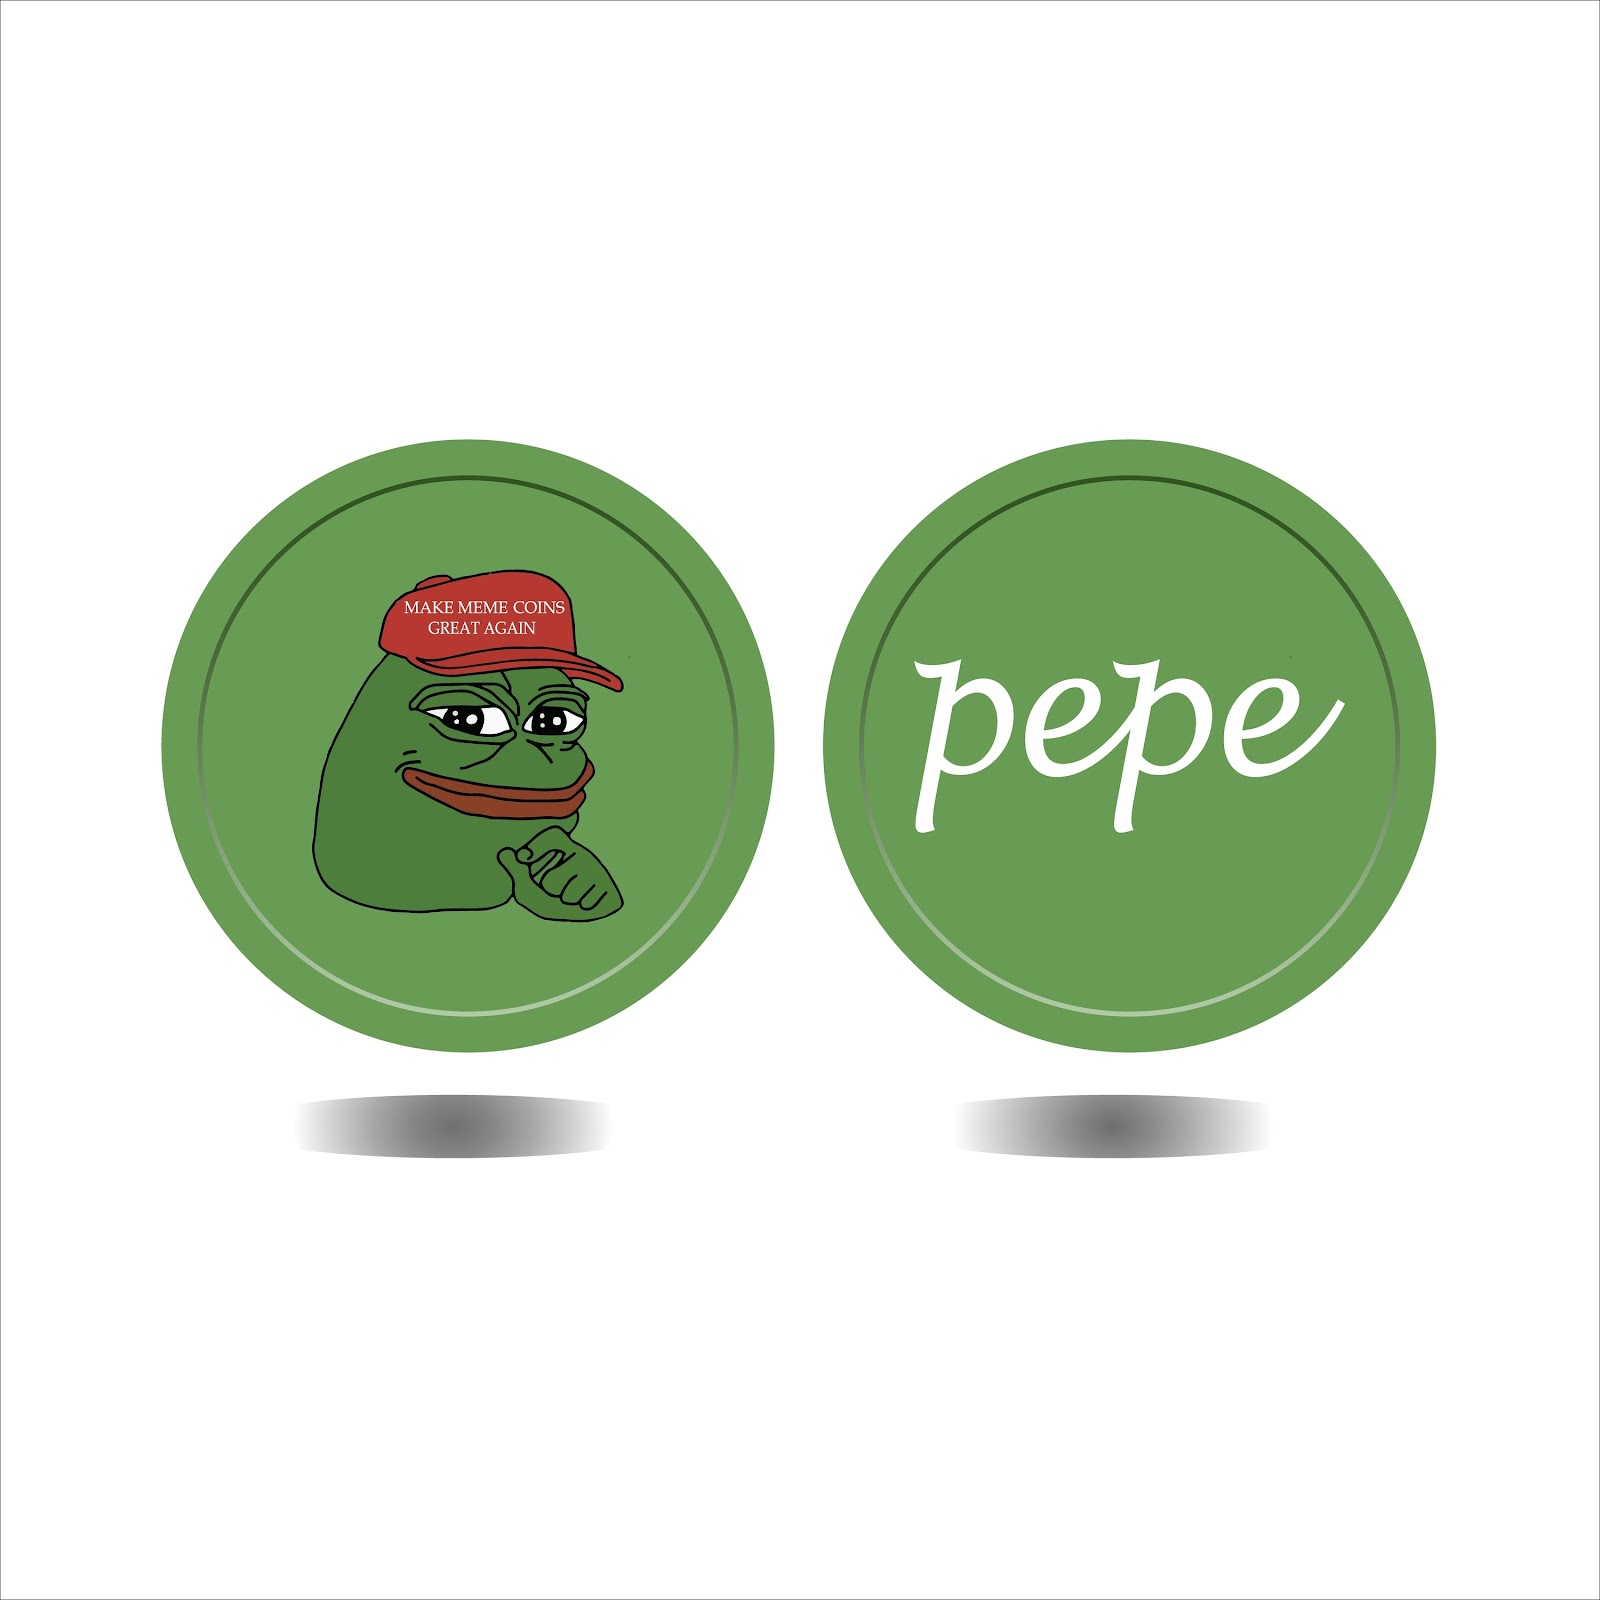 New Meme Favorites: Bonk (BONK), Pepe (PEPE), and NuggetRush (NUGX)